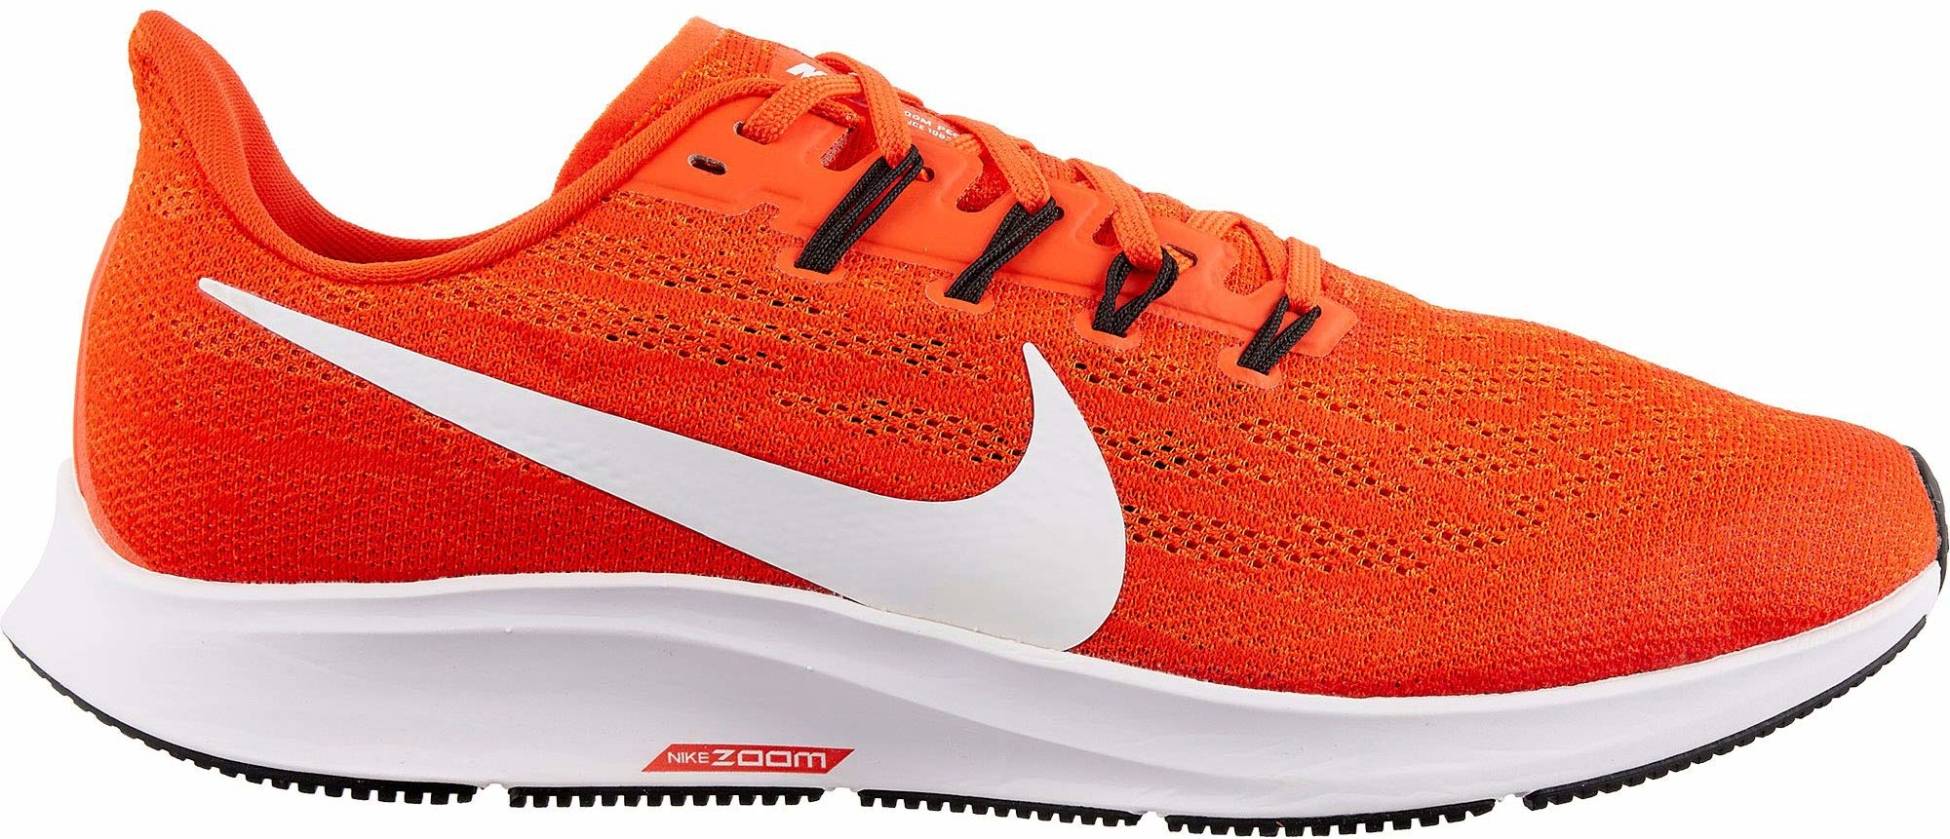 Save 24% on Orange Nike Running Shoes 